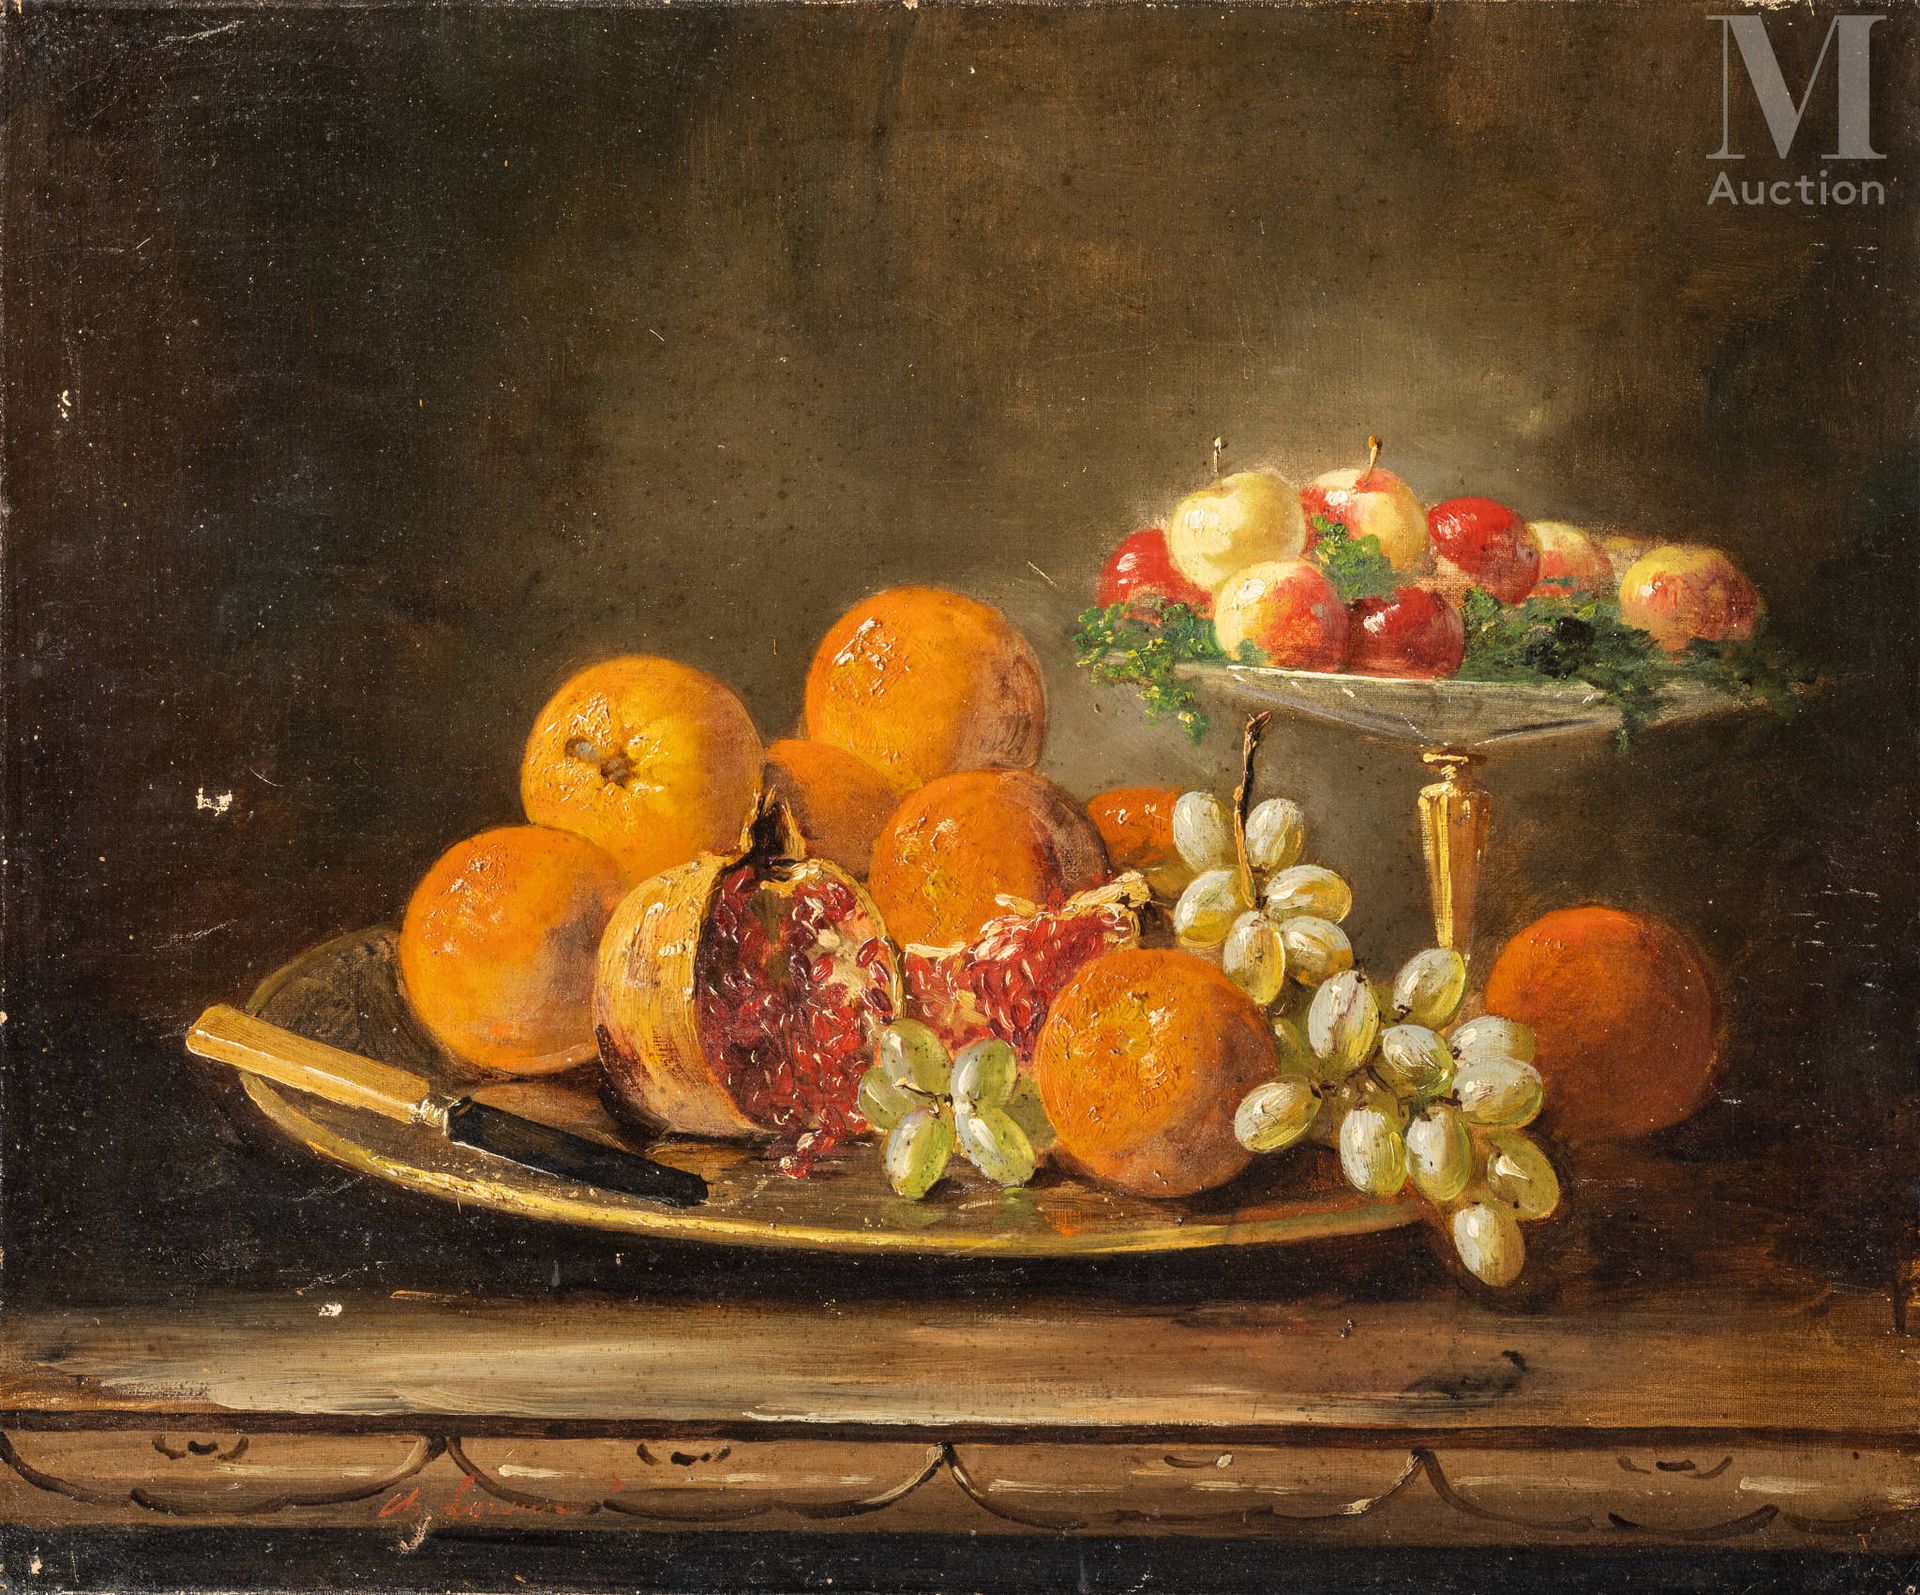 Ecole Française du XIXème siècle 石榴、橙子和葡萄的静物画。

布面油画
64 x 54 cm
左边有签名。
损坏，无画框